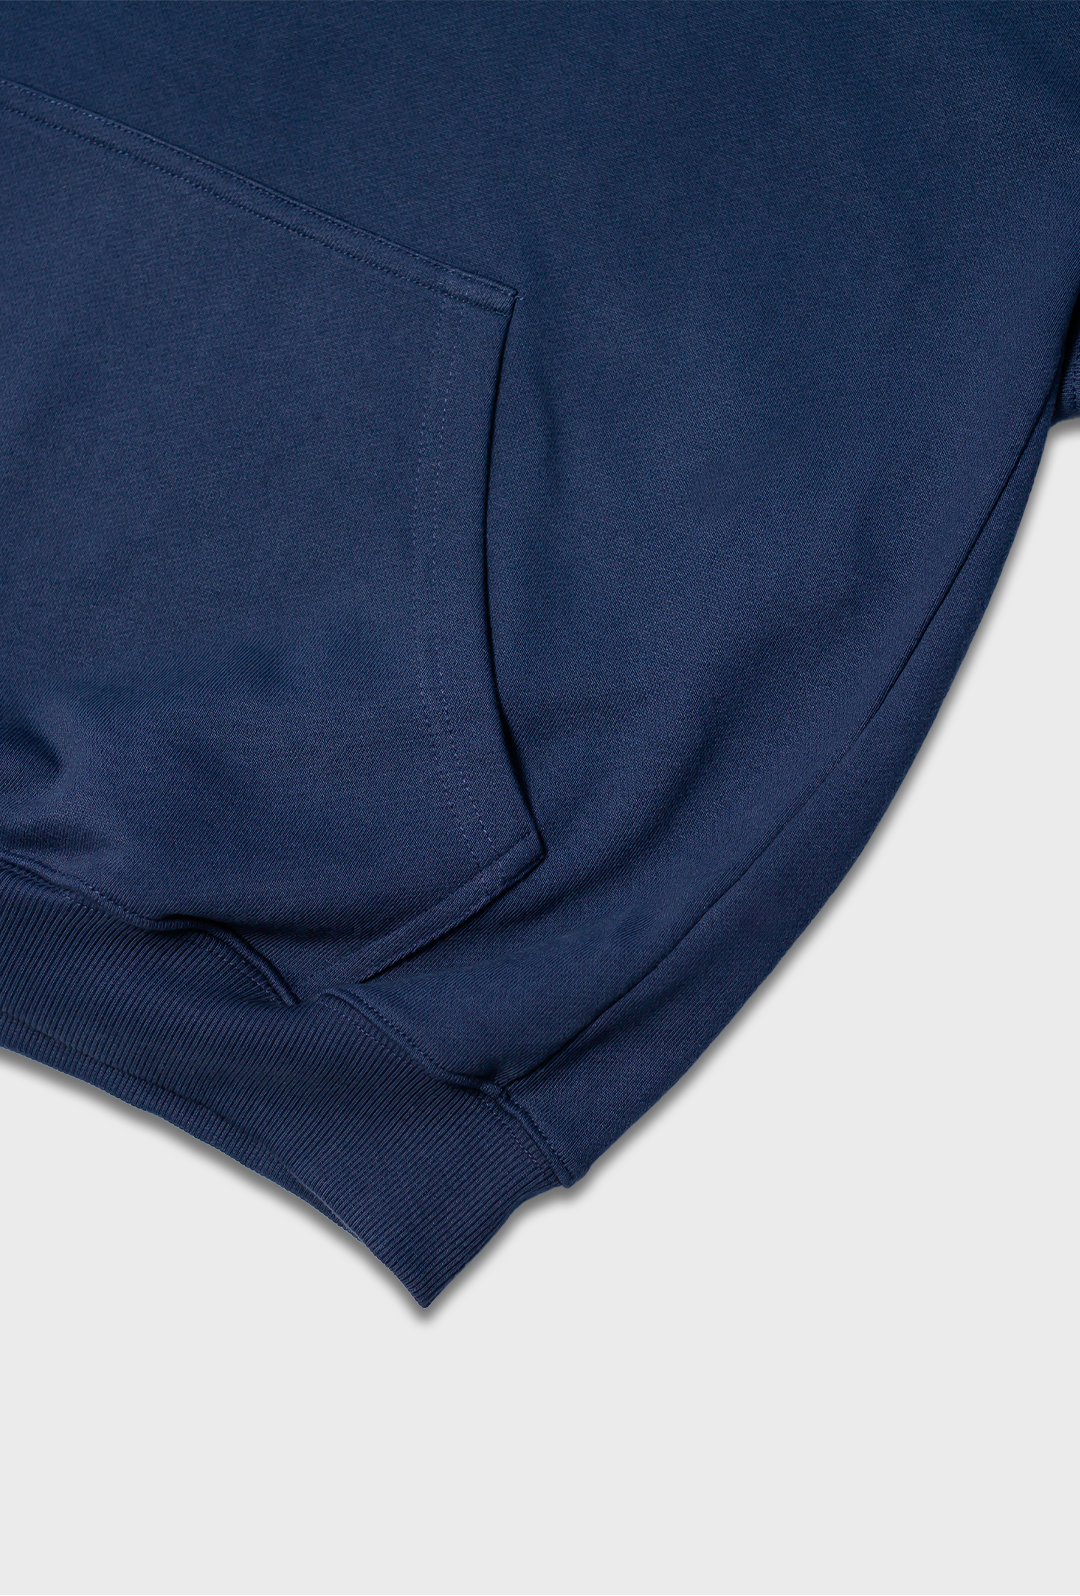 roller oversized dusk blue hoodie made organic cotton with kangaroo pocket